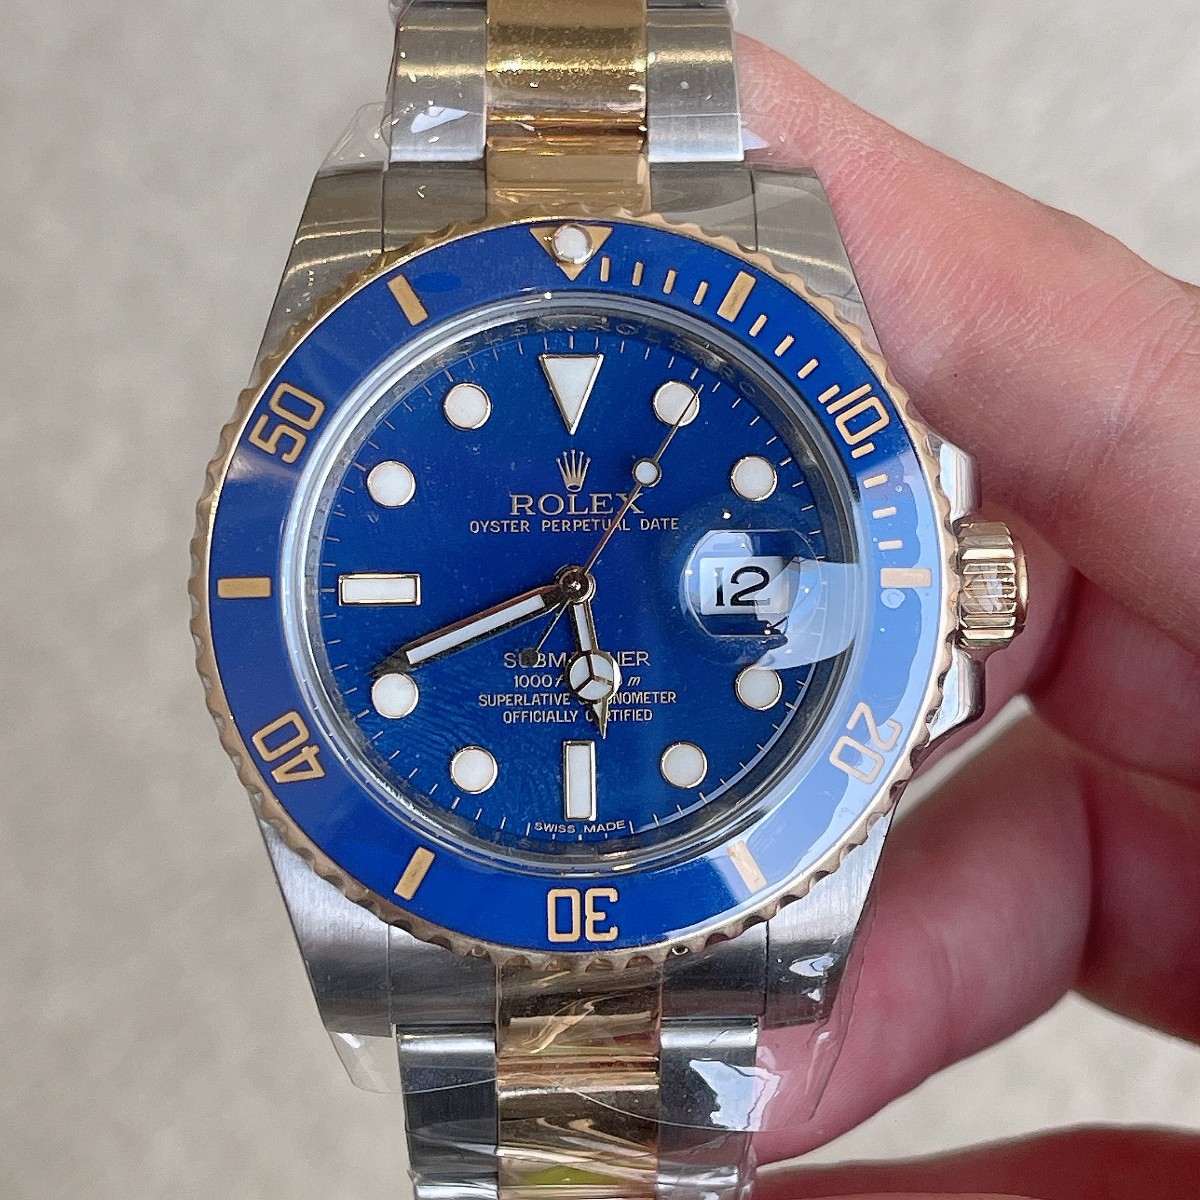 A786劳力士潜航者系列男士腕表名表手表网络拍卖公告